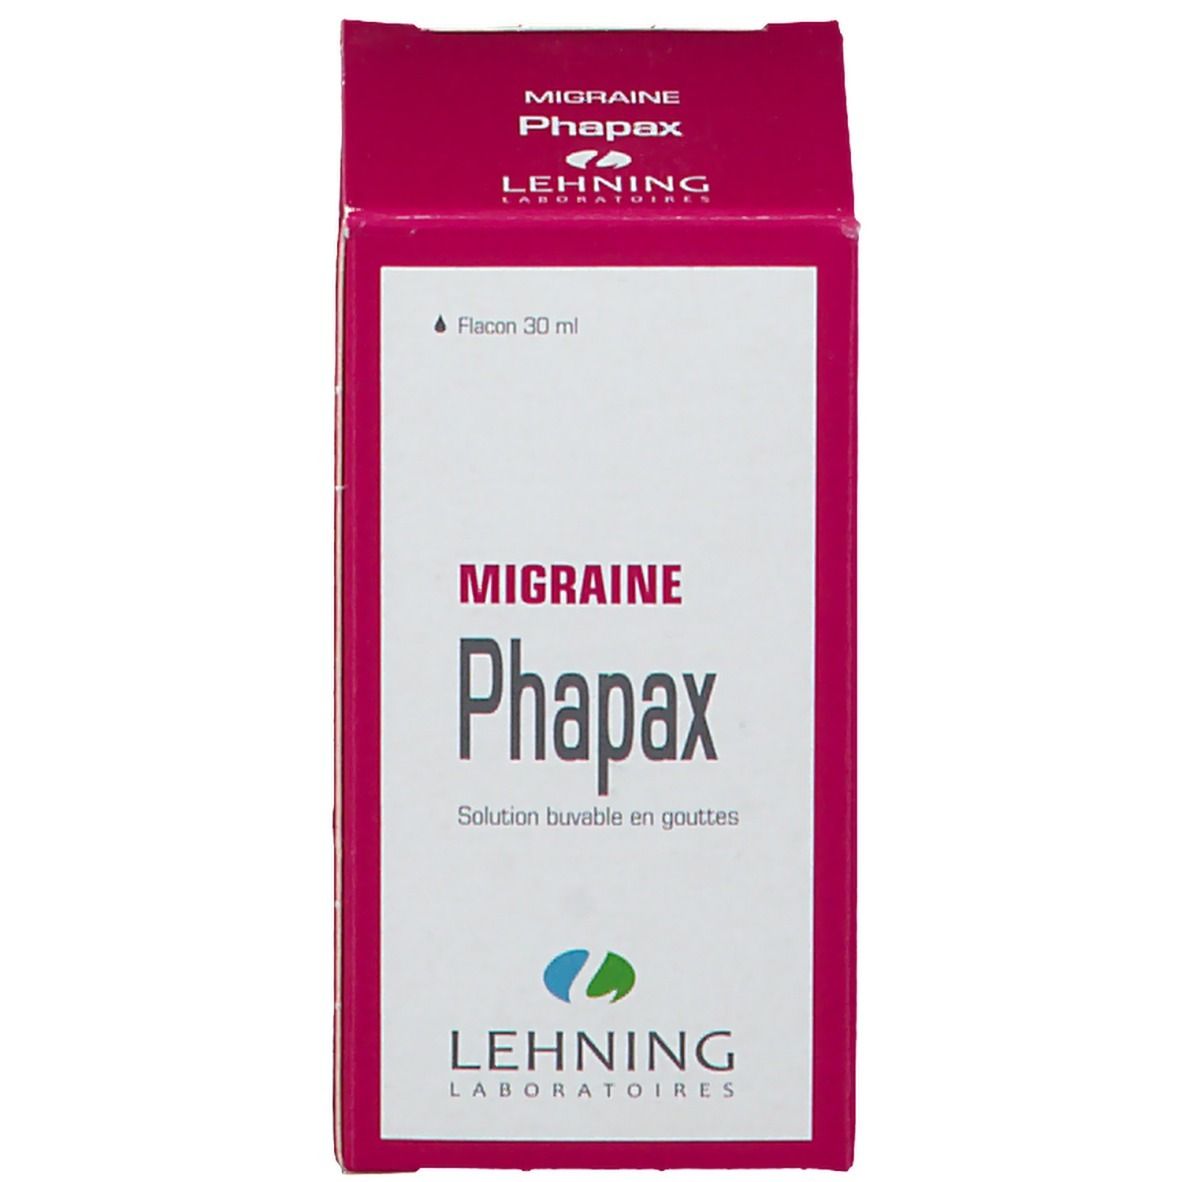 Phapax migraine Lehning flacon de 30 ml - PharmacieVeau